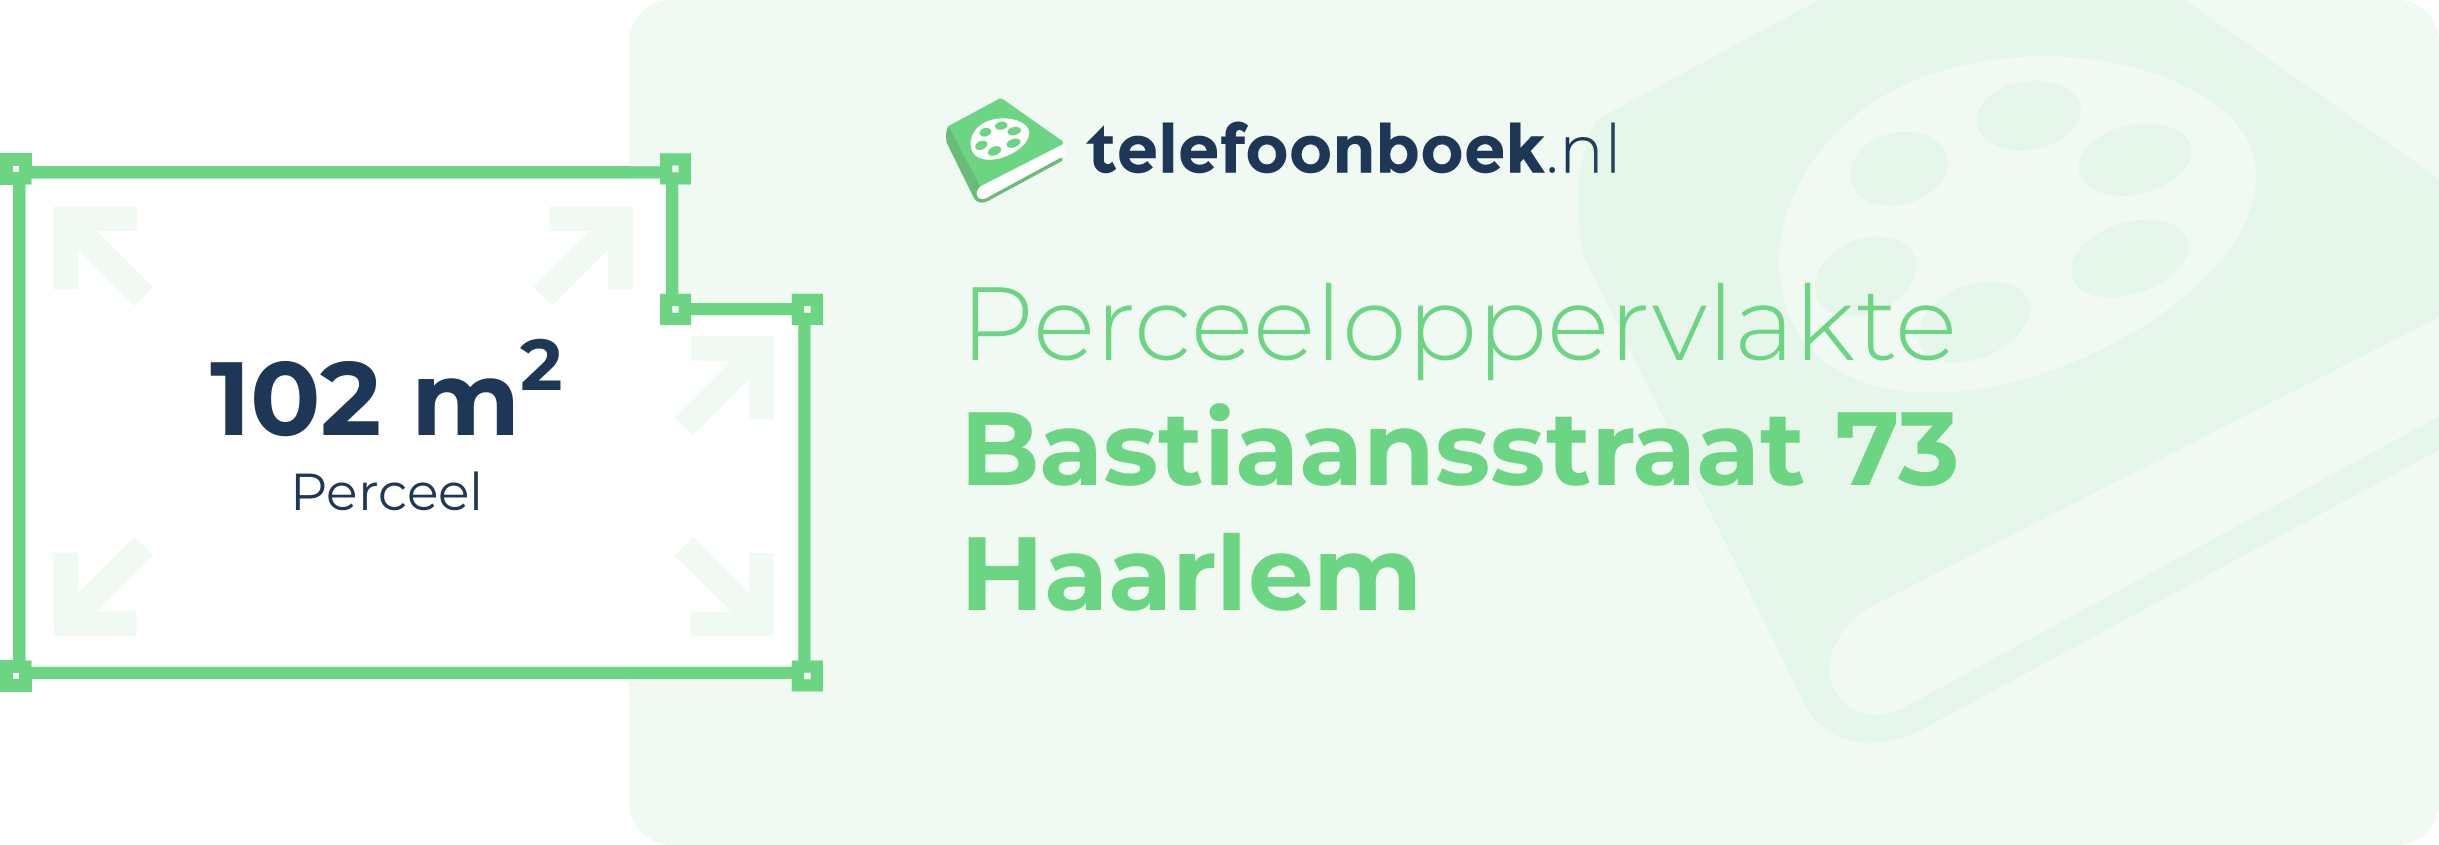 Perceeloppervlakte Bastiaansstraat 73 Haarlem